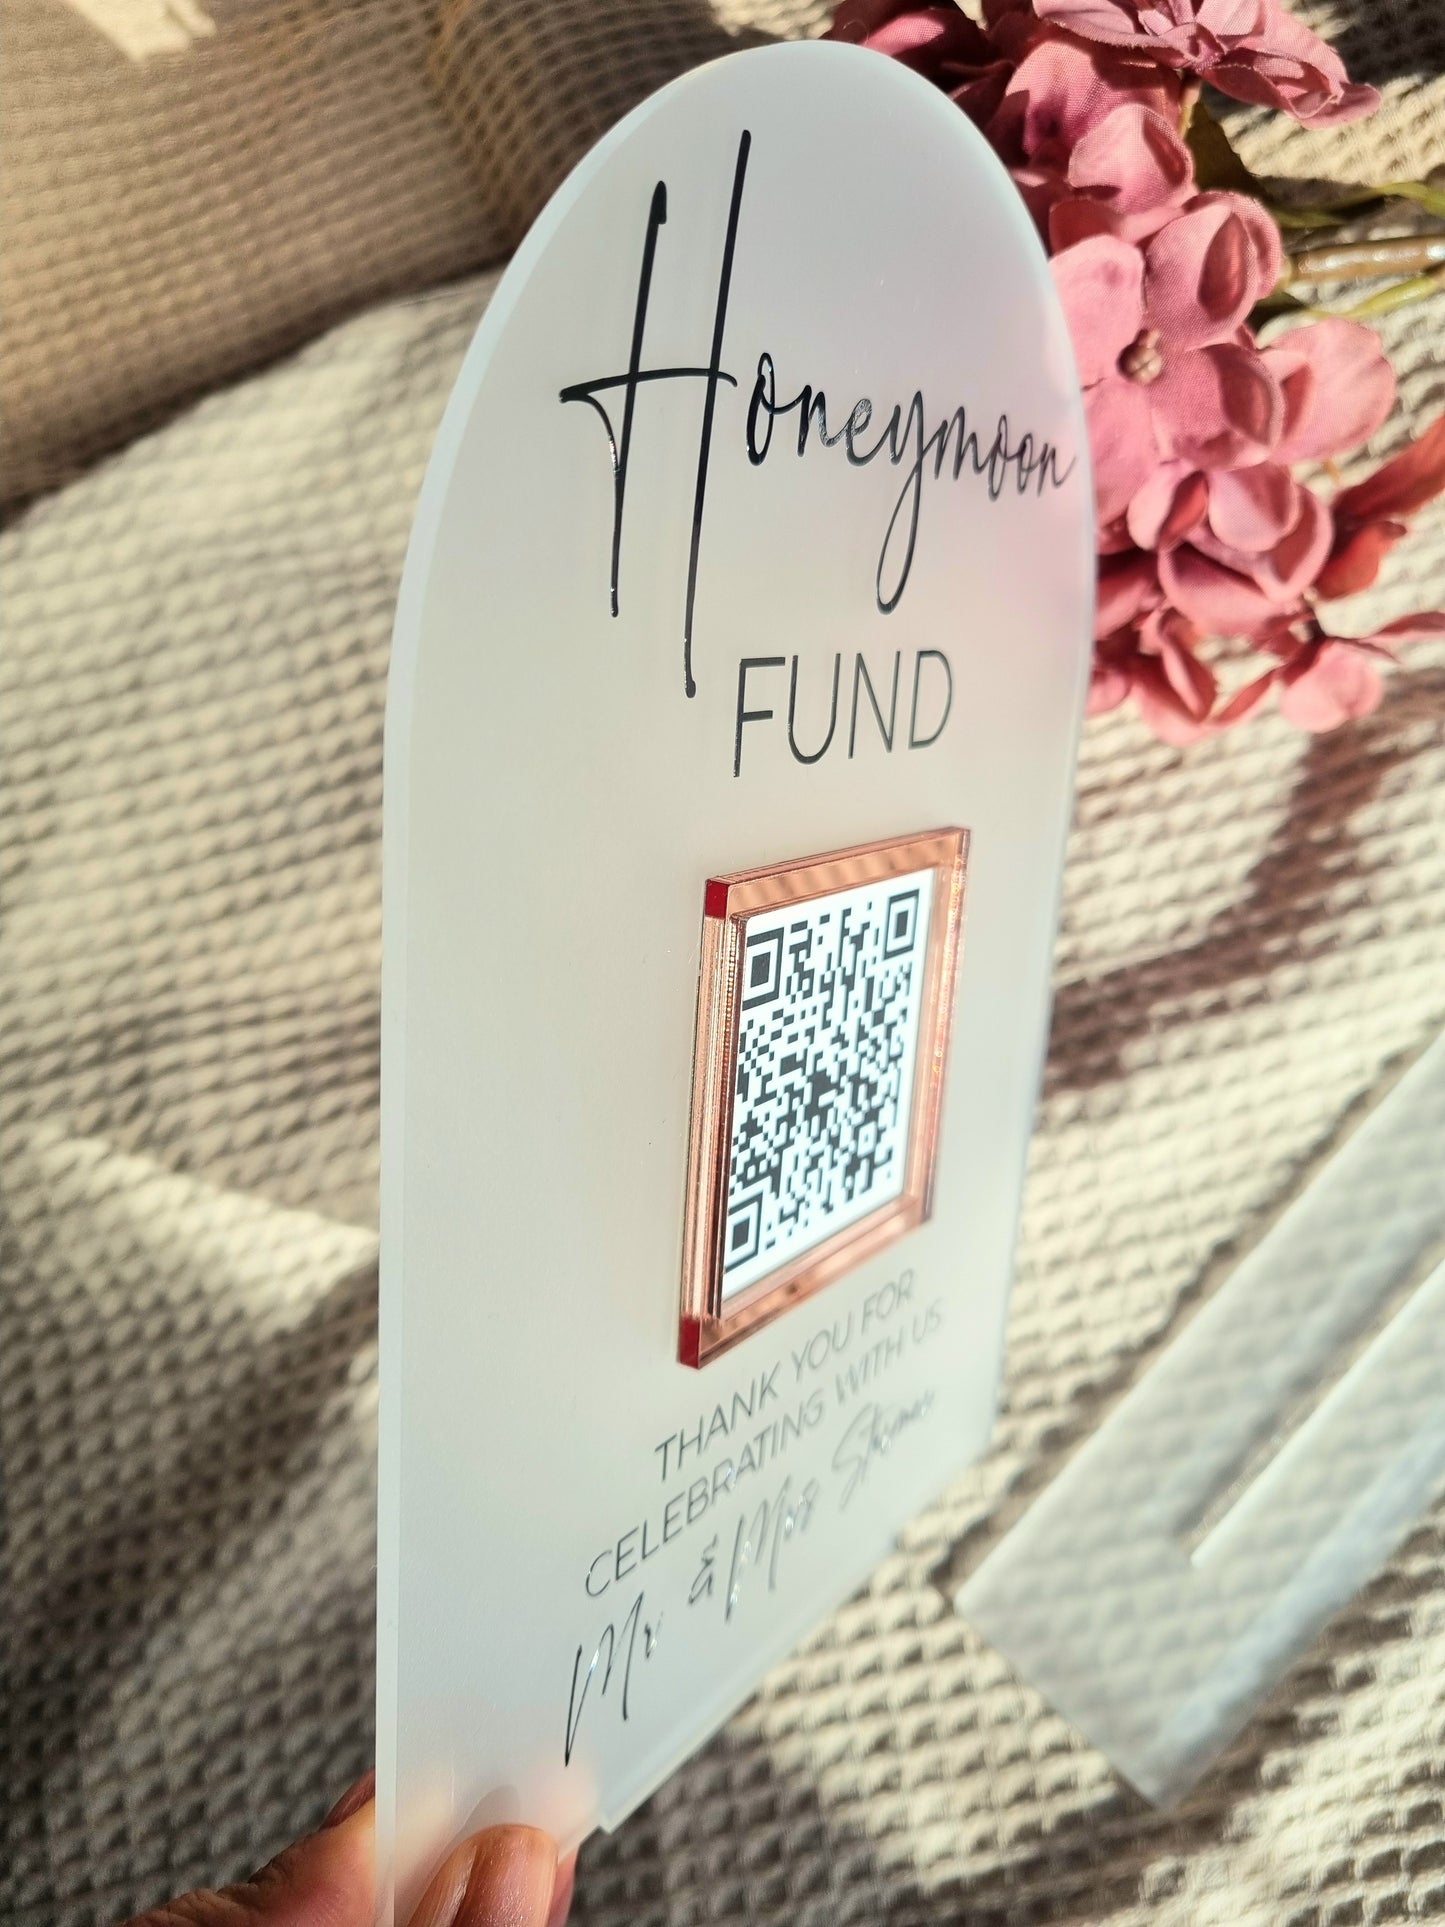 Honeymoon Fund QR Code Sign